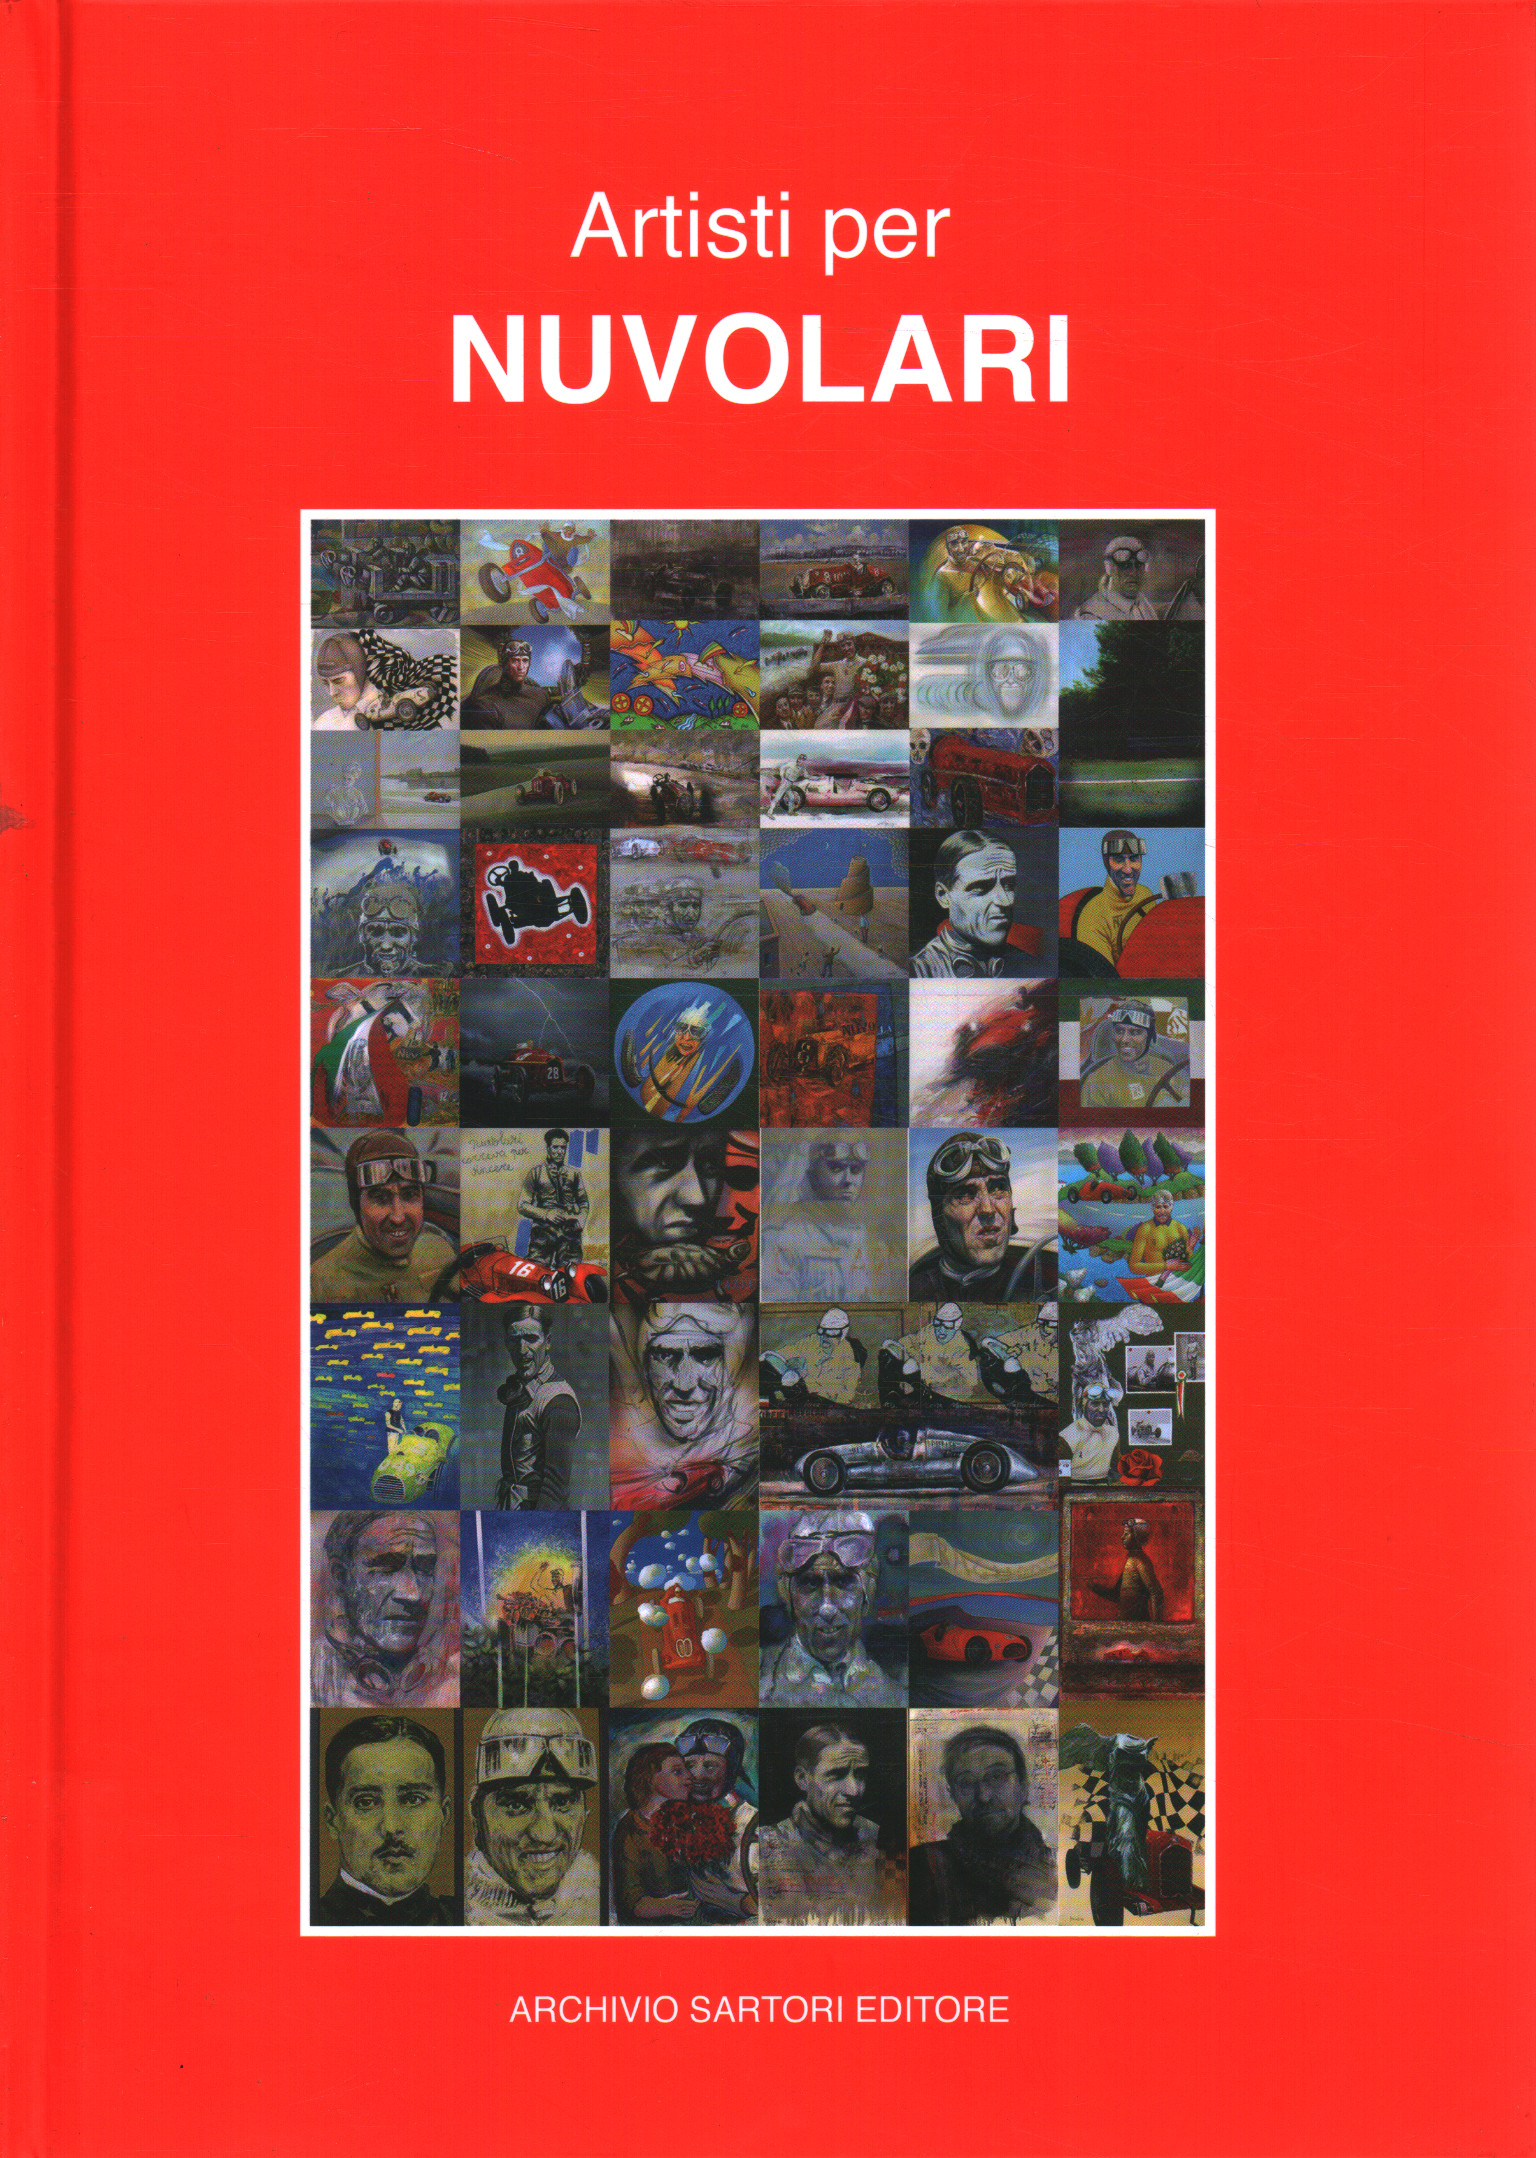 Artists for Nuvolari